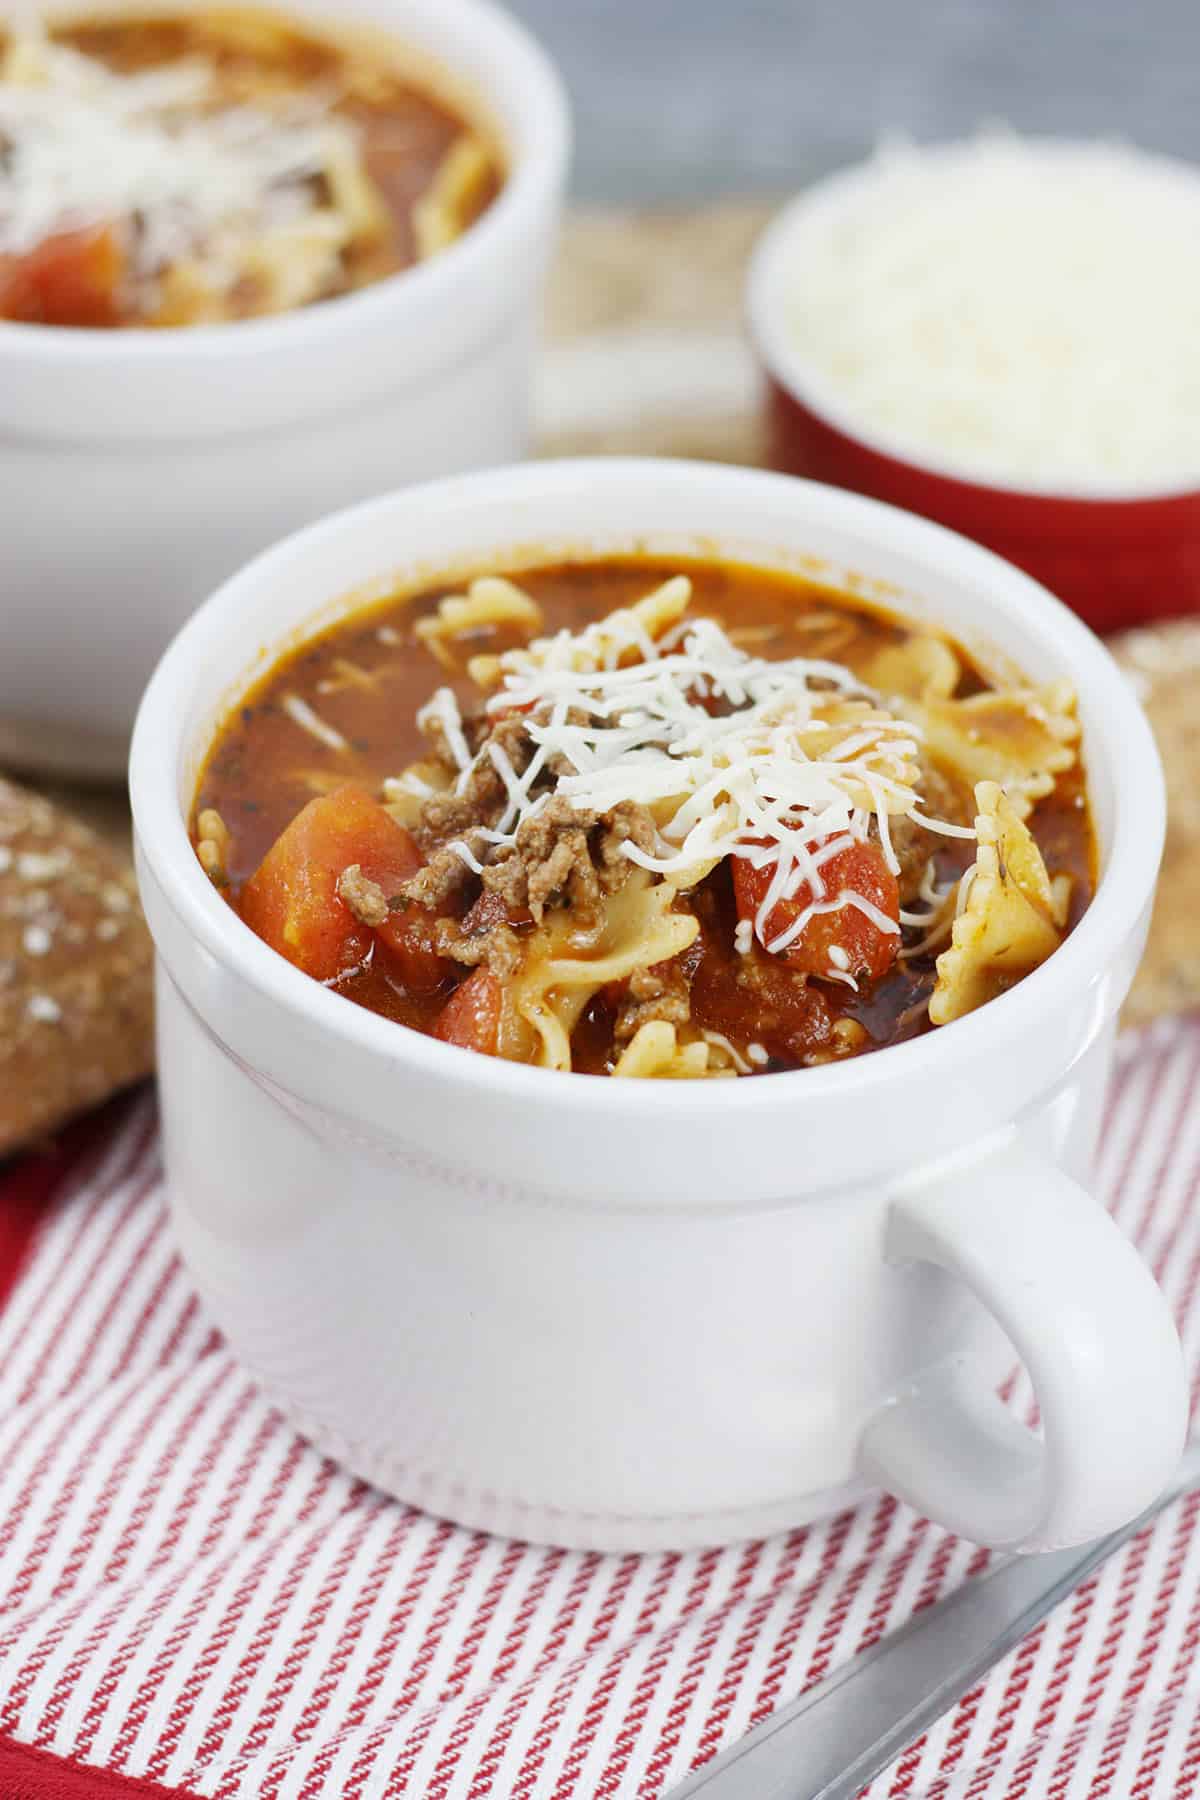 https://www.mostlyhomemademom.com/wp-content/uploads/2012/11/Lasagna-Soup-Recipes.jpg